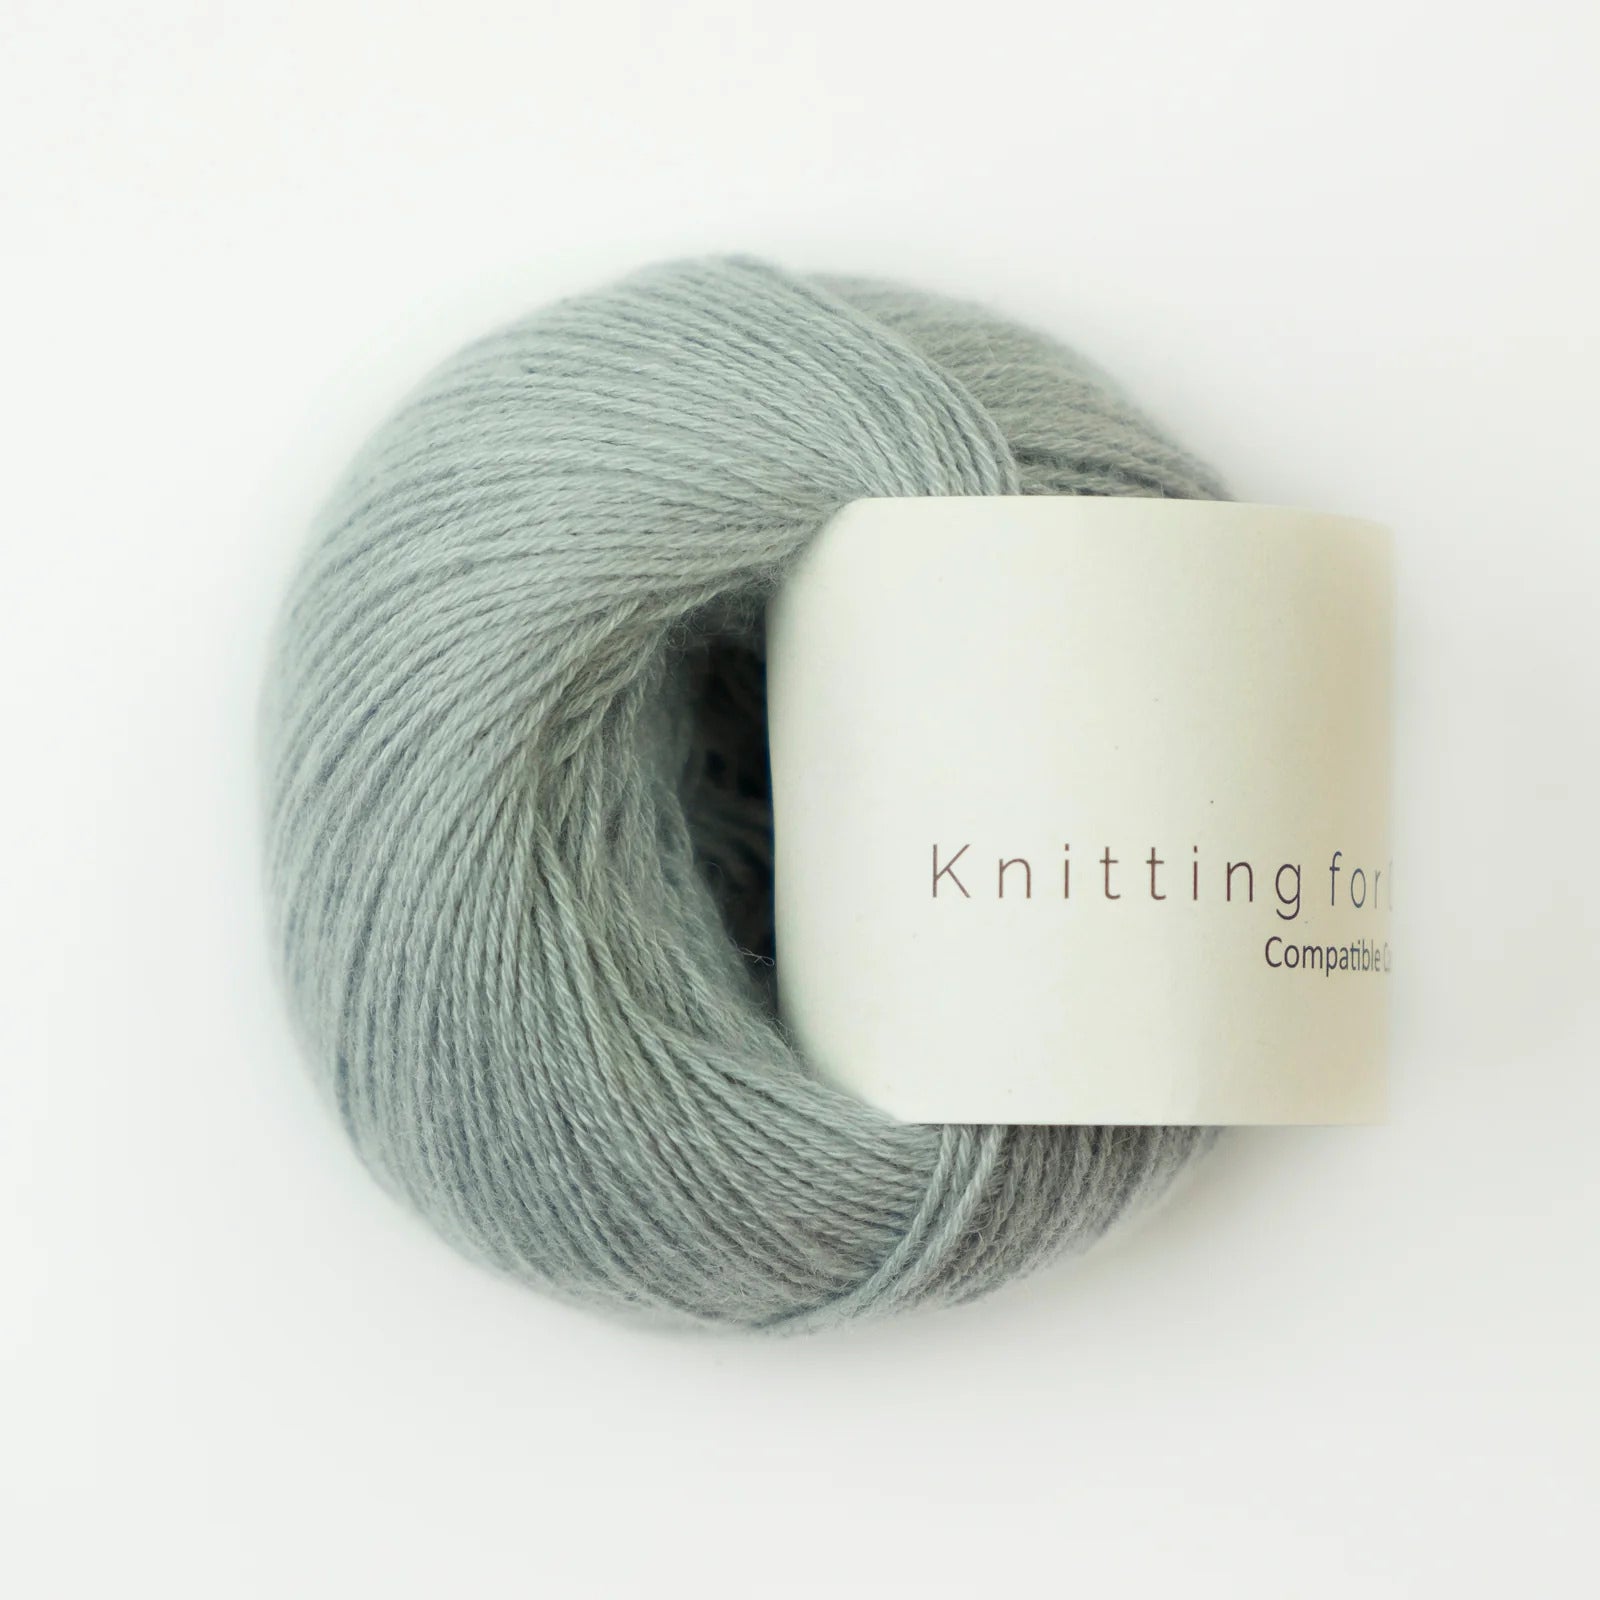 Compatible Cashmere Soft Blue - Knitting for Olive